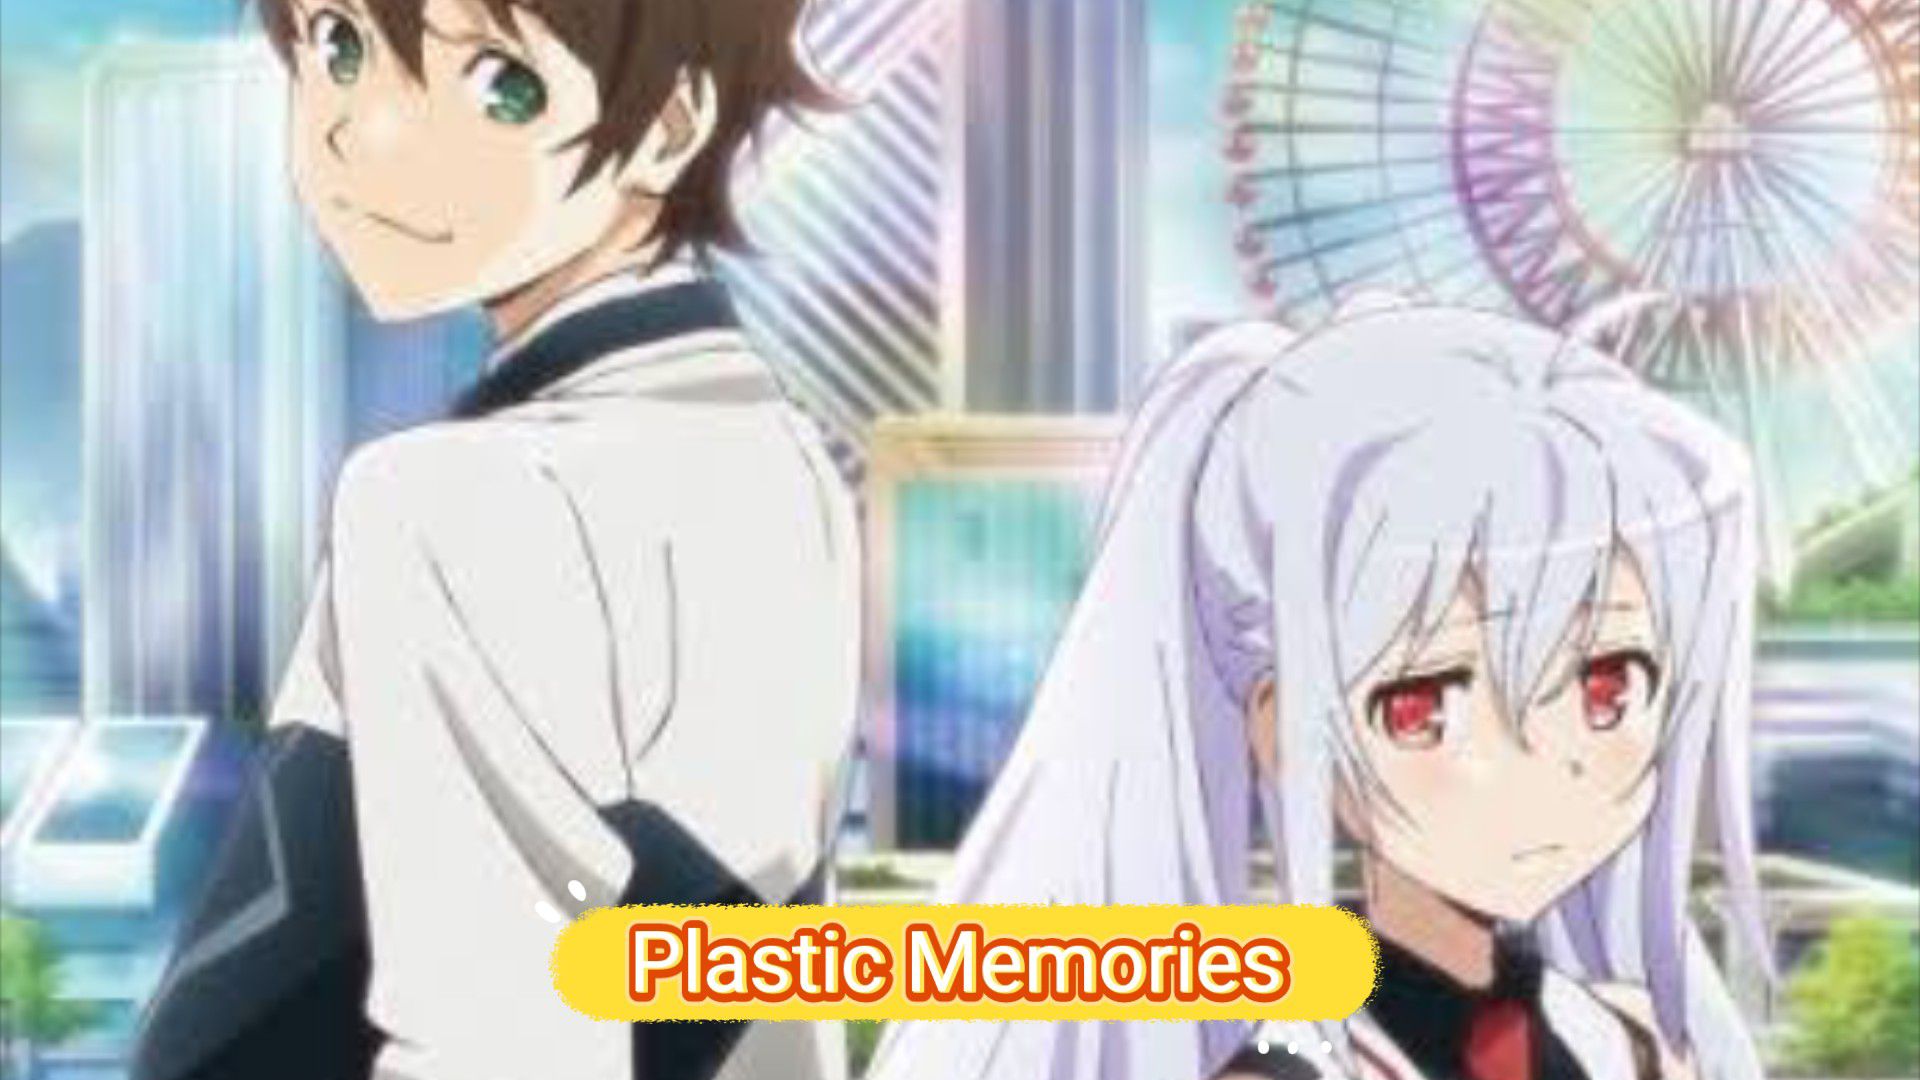 ep 13 final scene (plastic memories)☪️ 